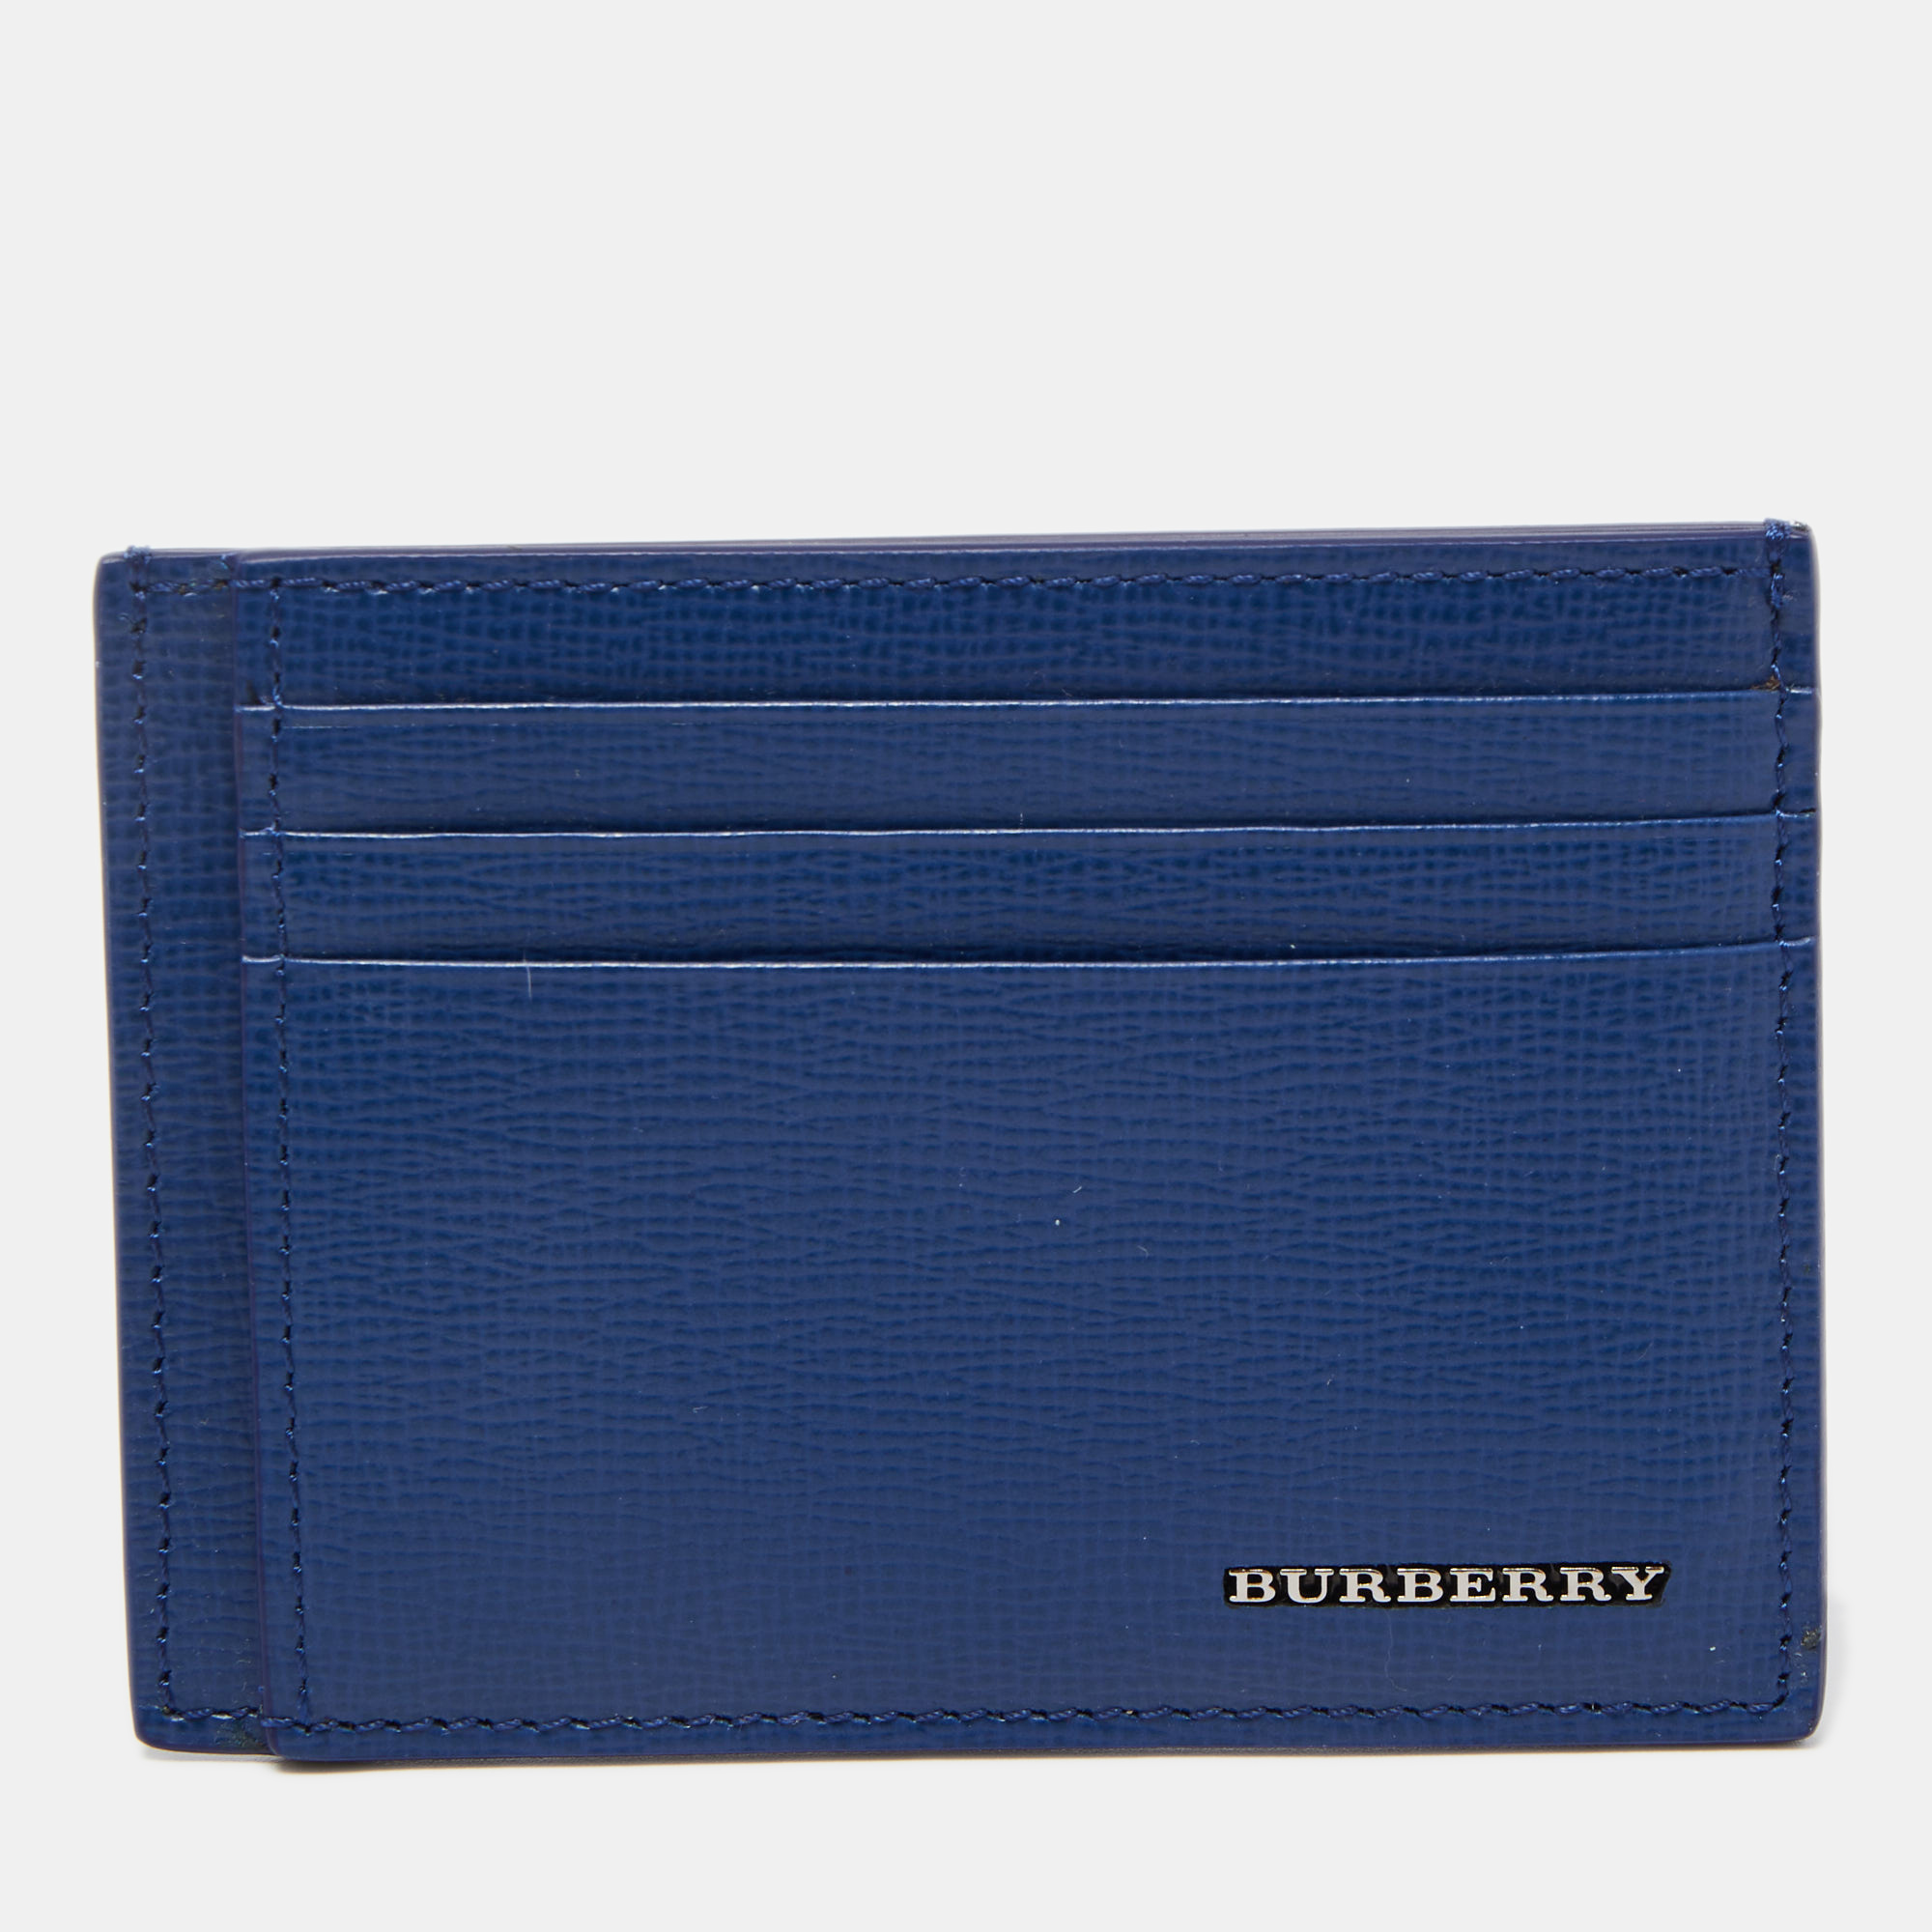 Wallets & purses Burberry - Cavendish Vintage check continental wallet -  4074704